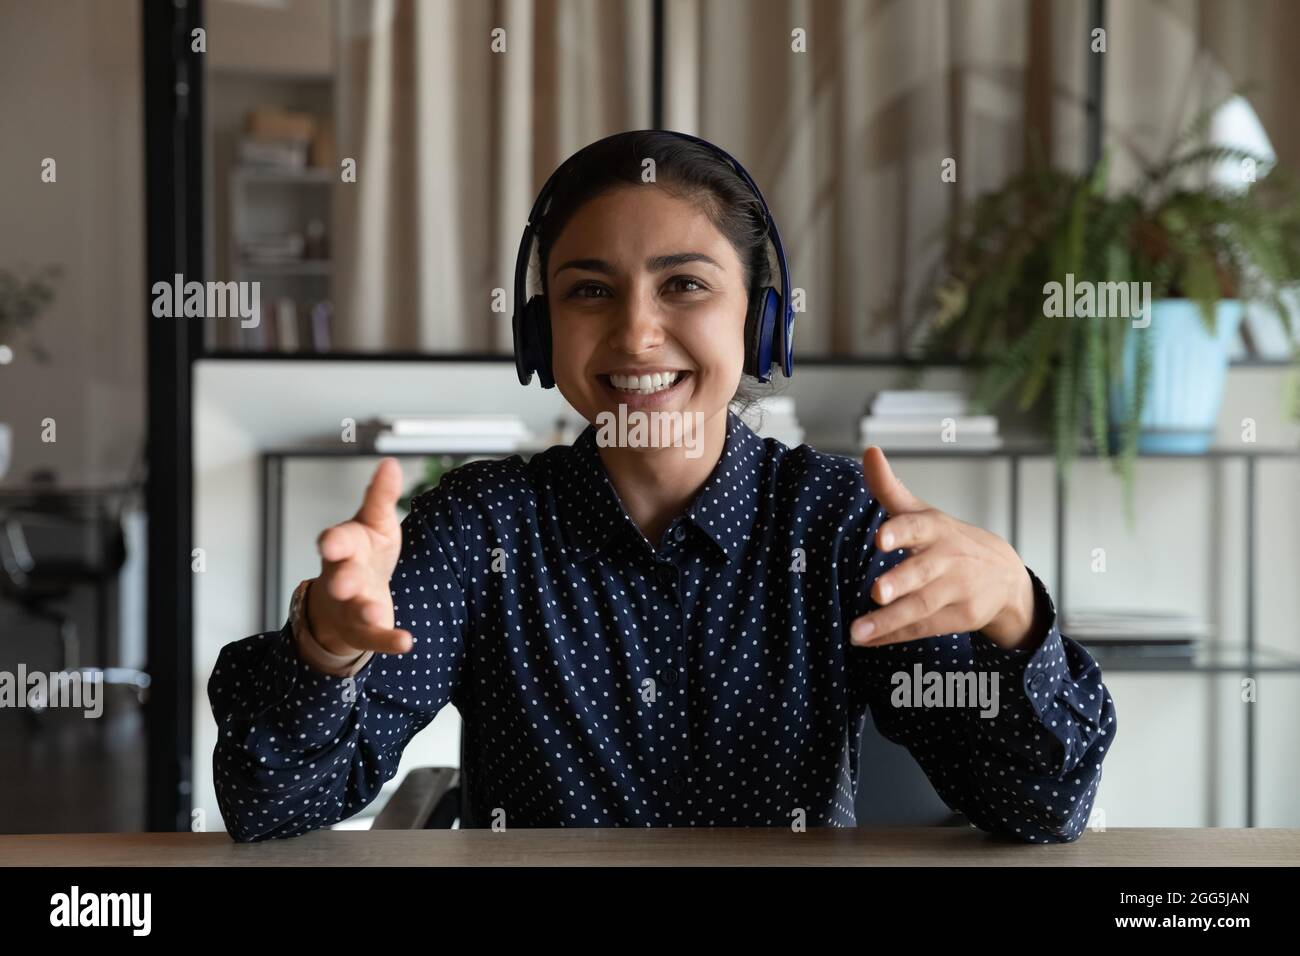 Head shot portrait of smiling Indian businesswoman in headphones speaking Stock Photo